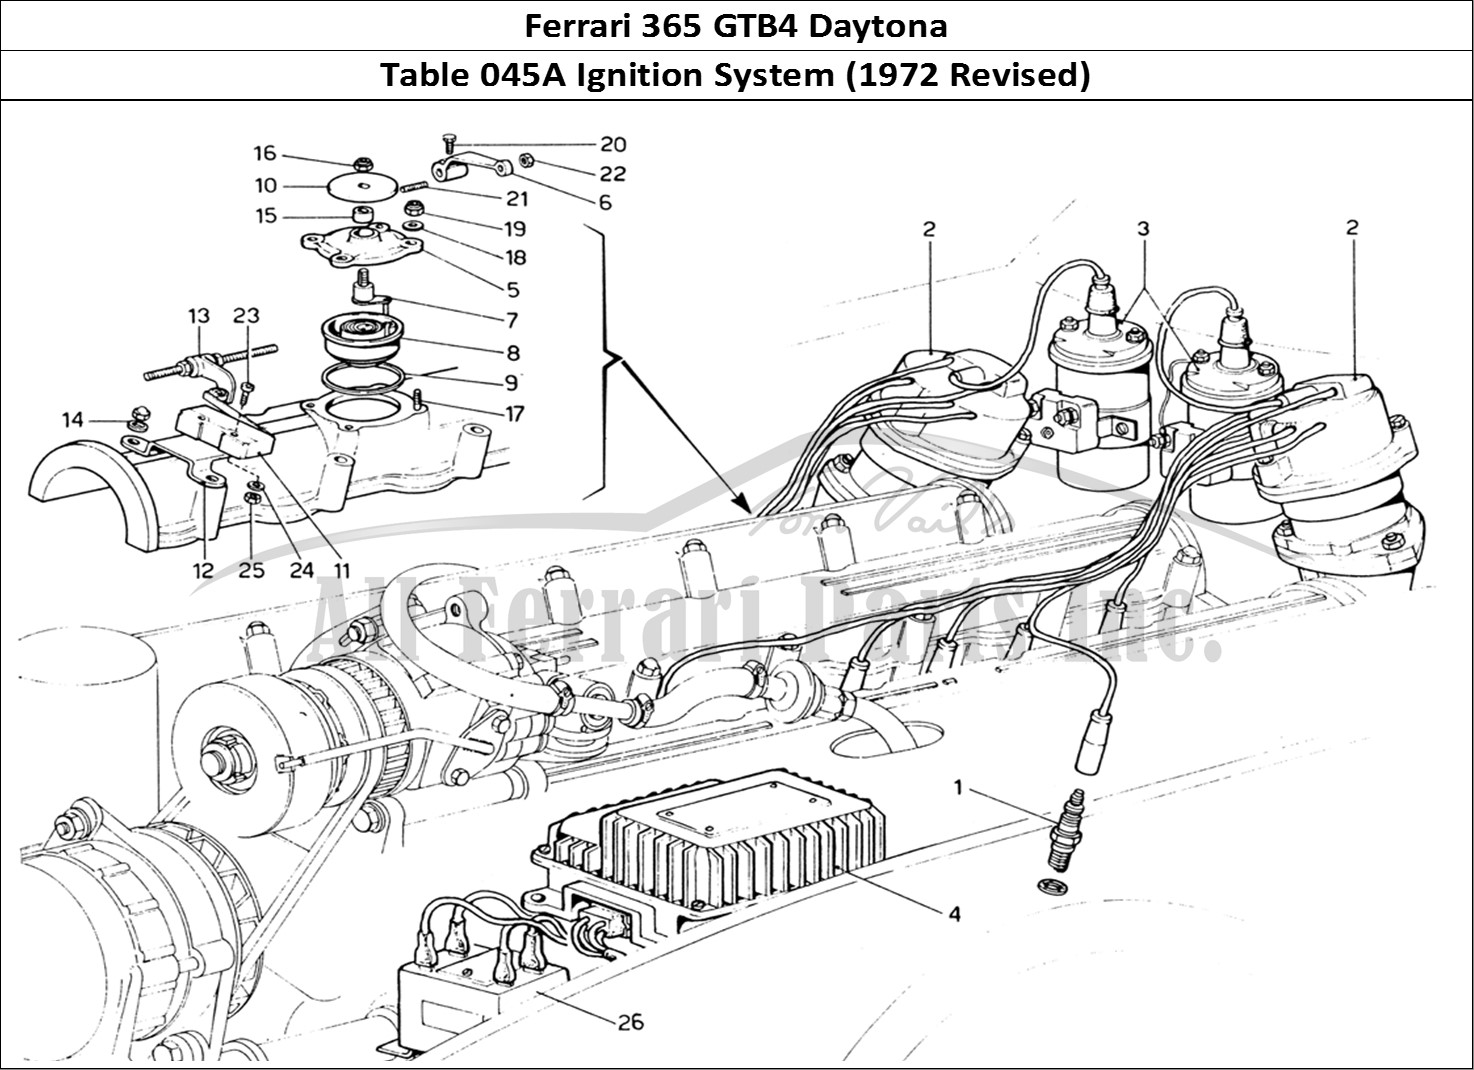 Ferrari Parts Ferrari 365 GTB4 Daytona (1969) Page 045 Ignition System (1972 Rev